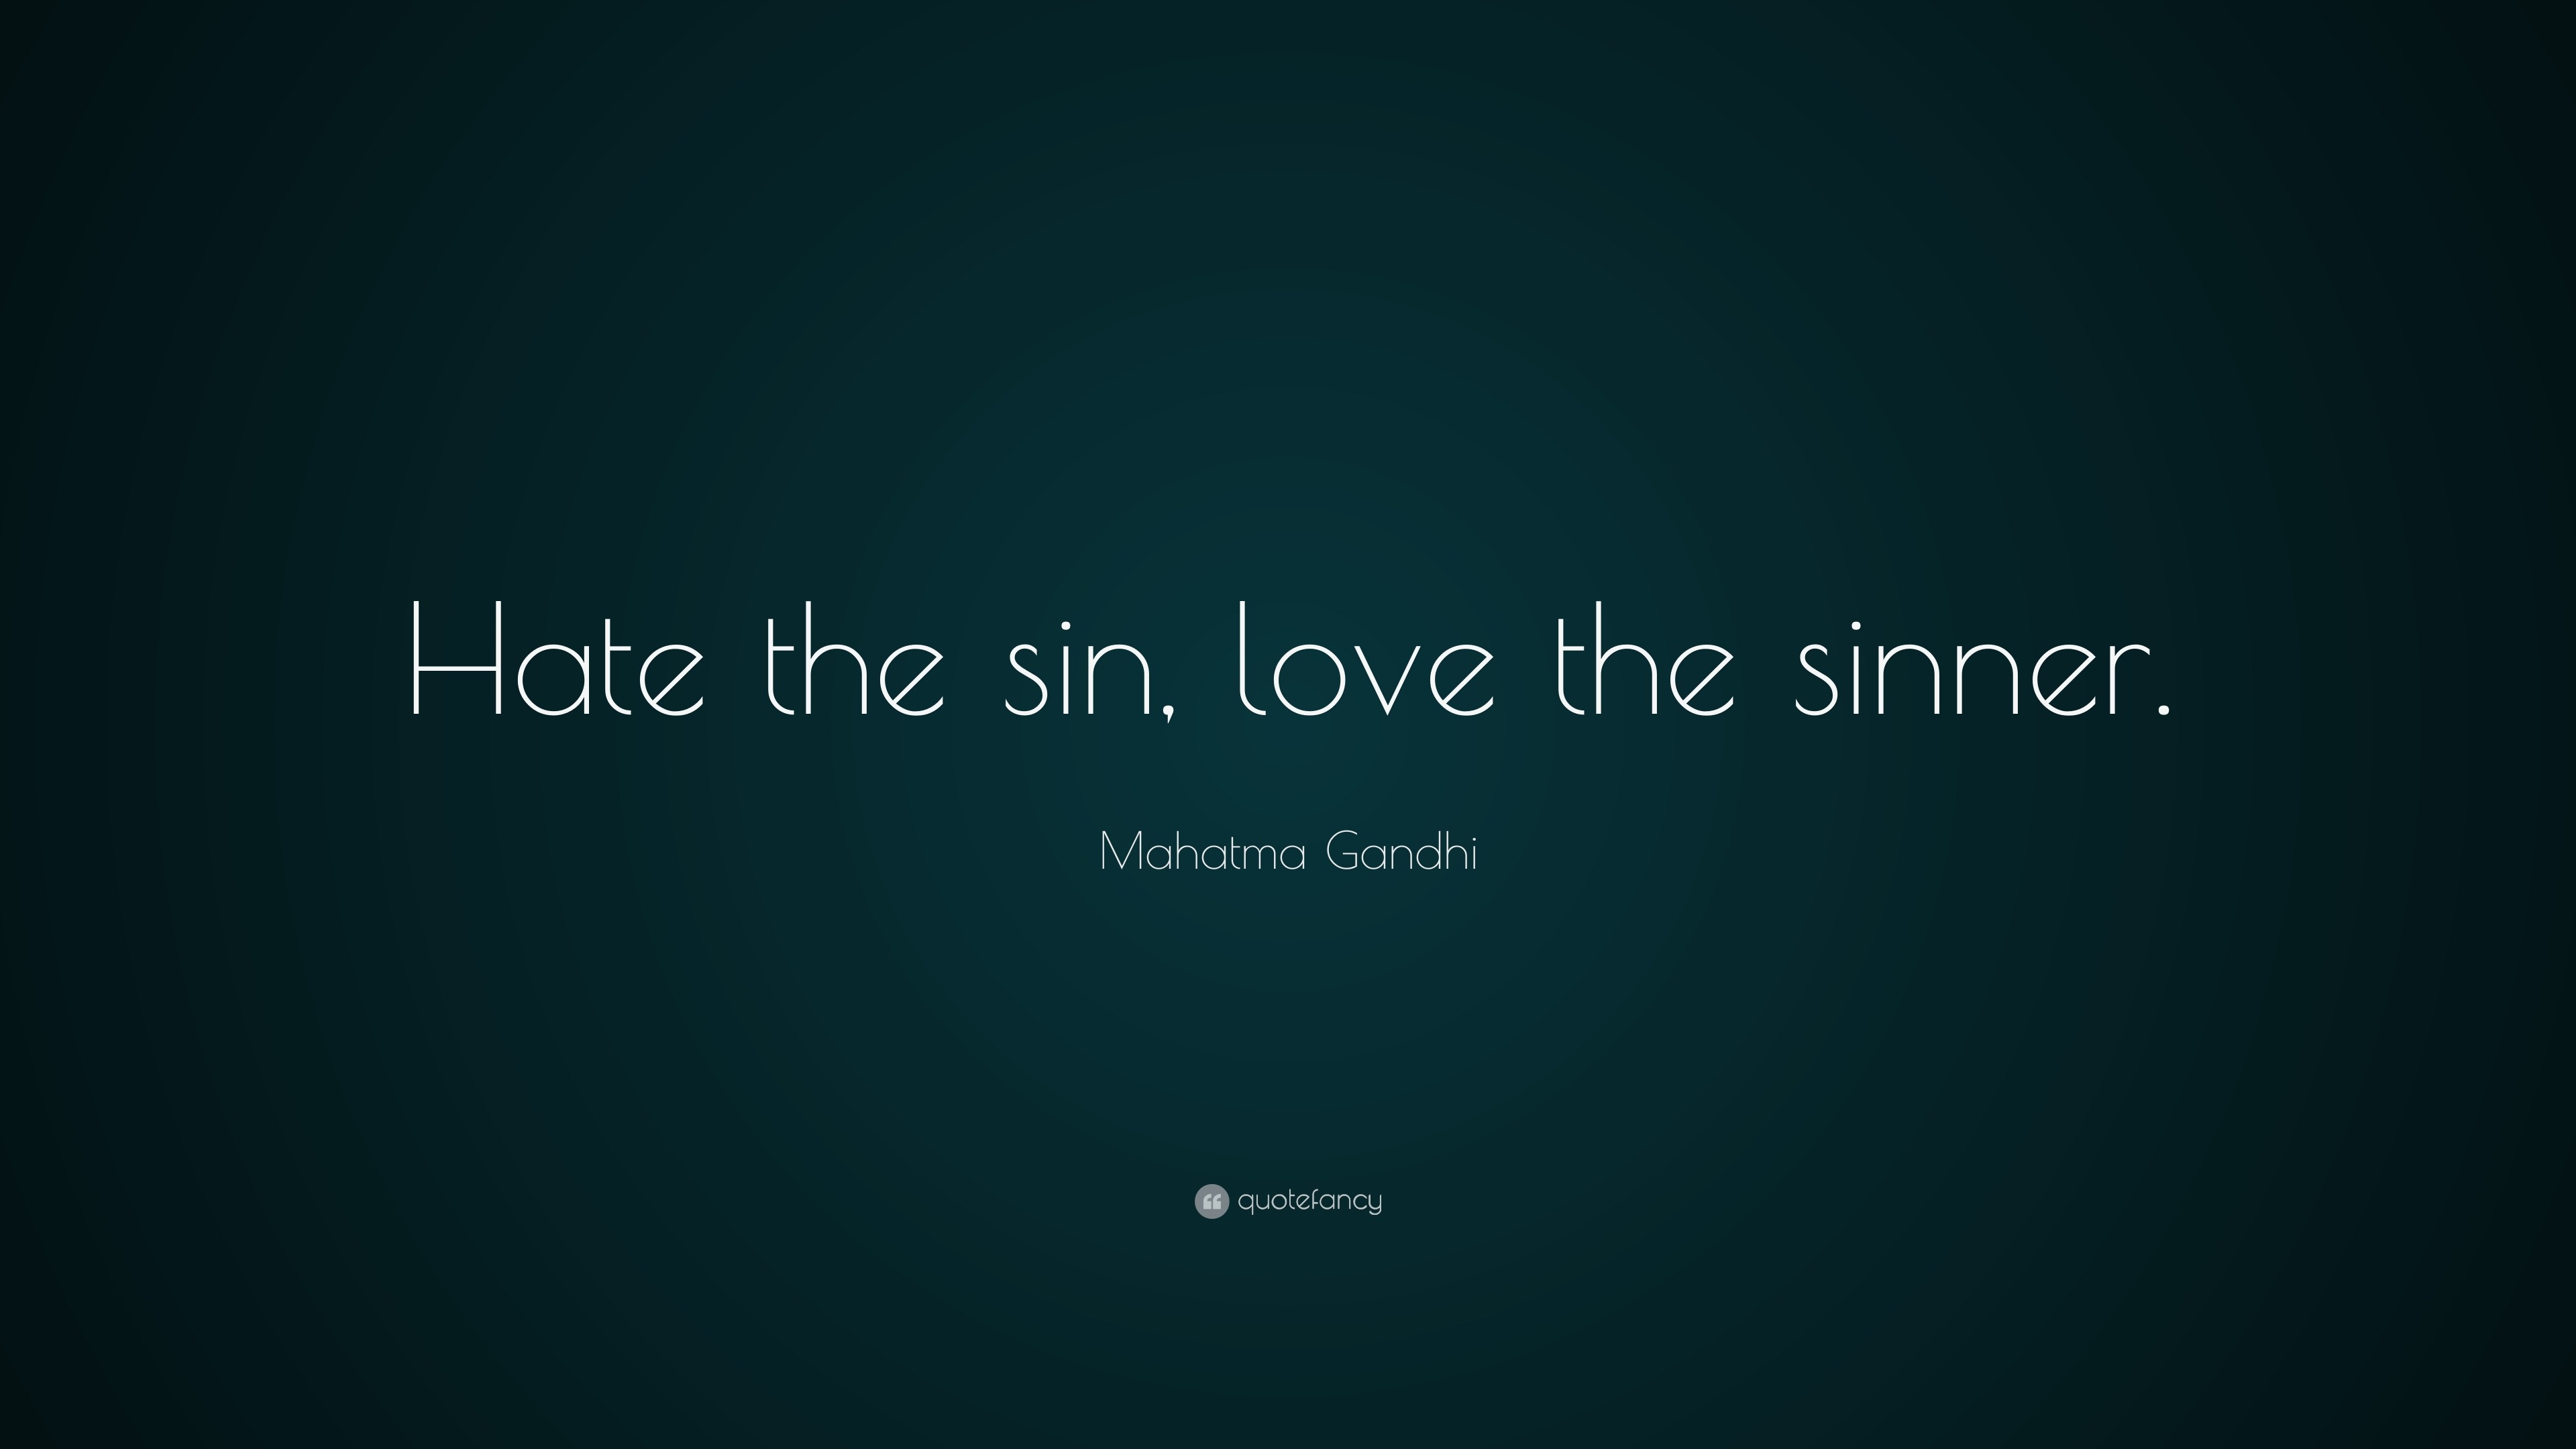 Mahatma Gandhi Quote “Hate the sin love the sinner ”